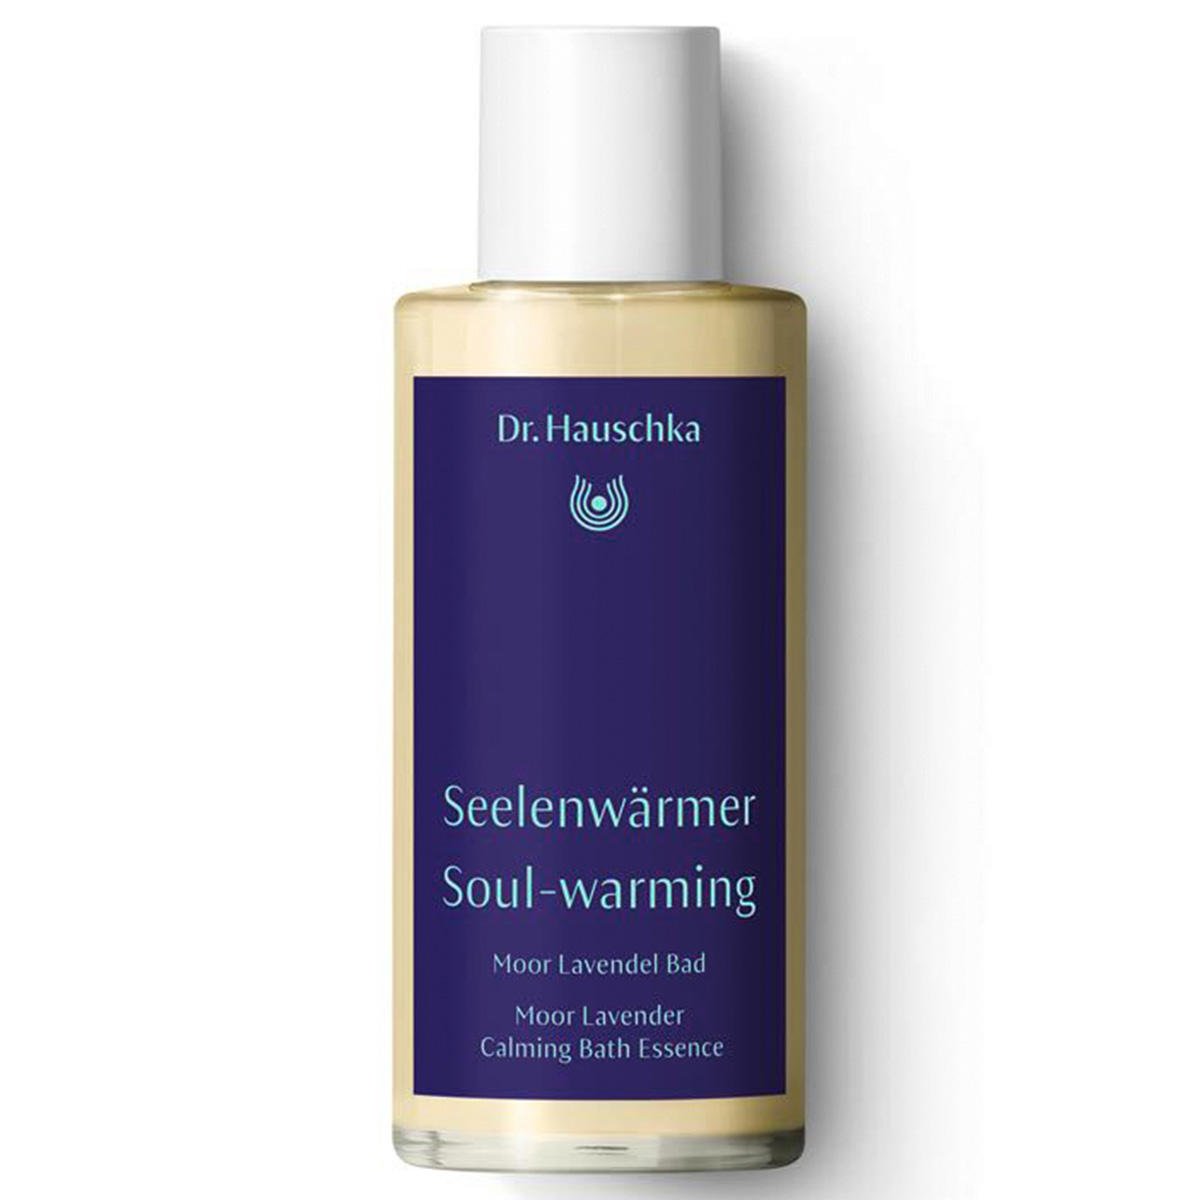 Dr. Hauschka Moor Lavendel Bad Limited Edition Seelenwärmer 100 ml - 1